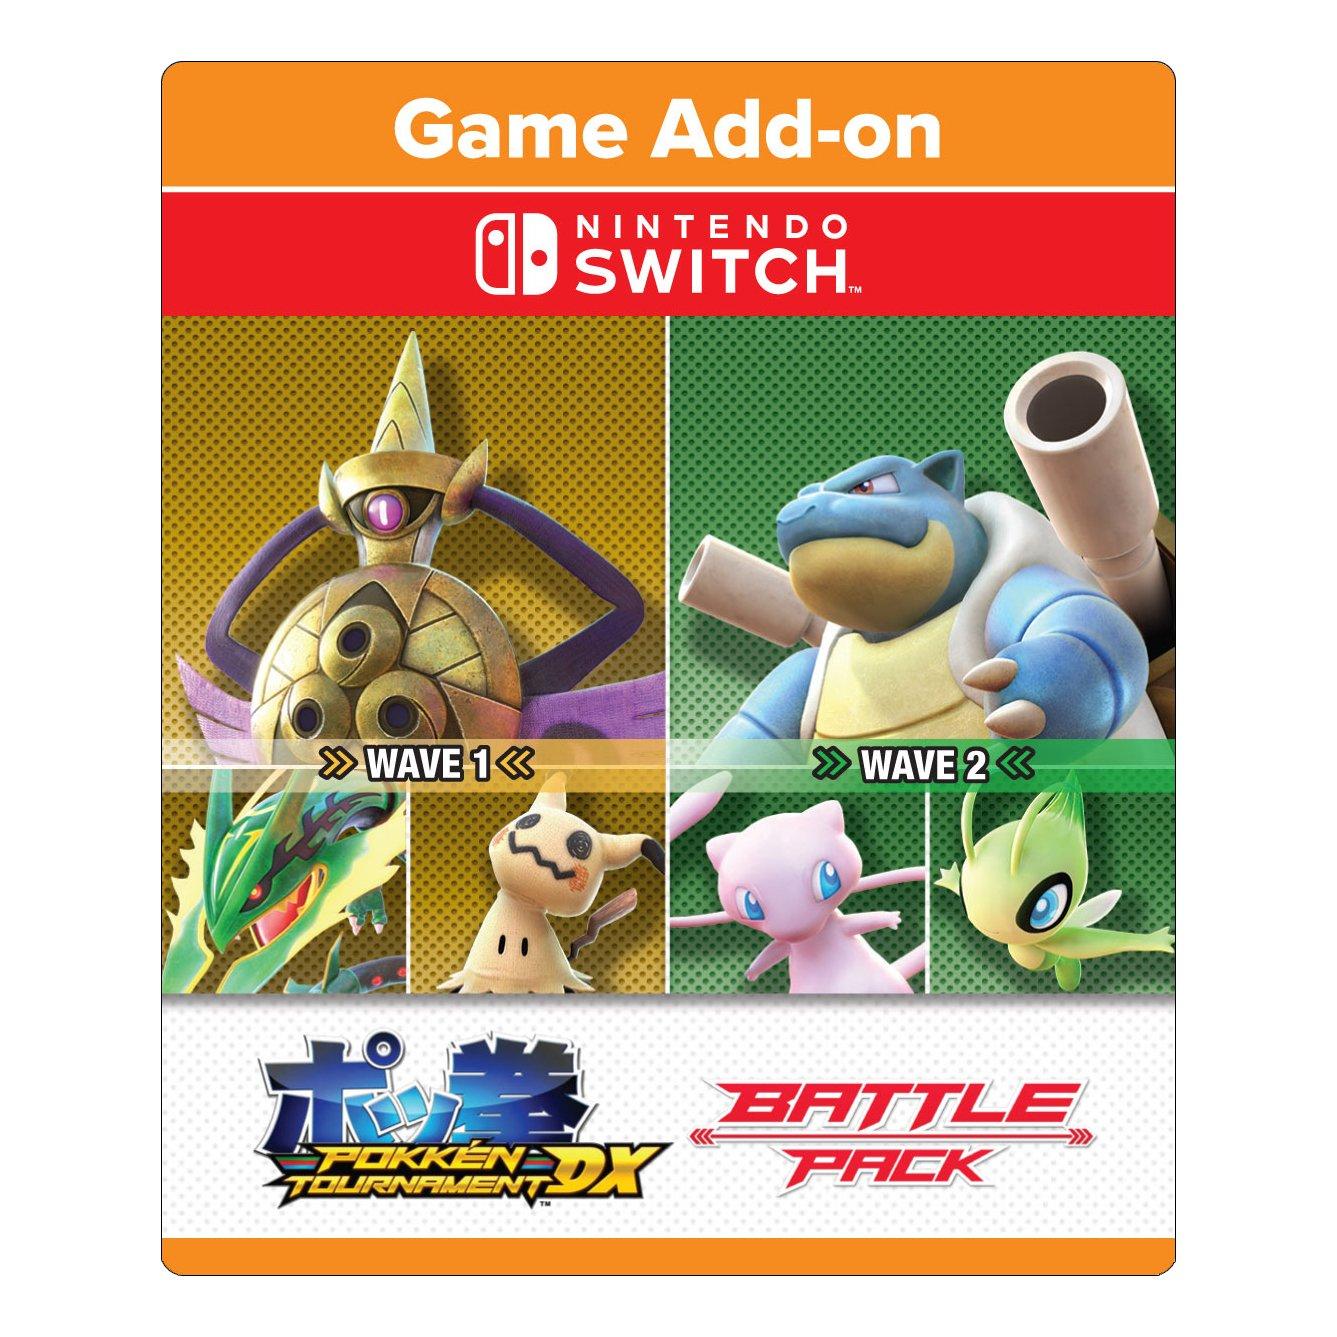 Pokken Tournament DX Battle Pack DLC | Nintendo | GameStop